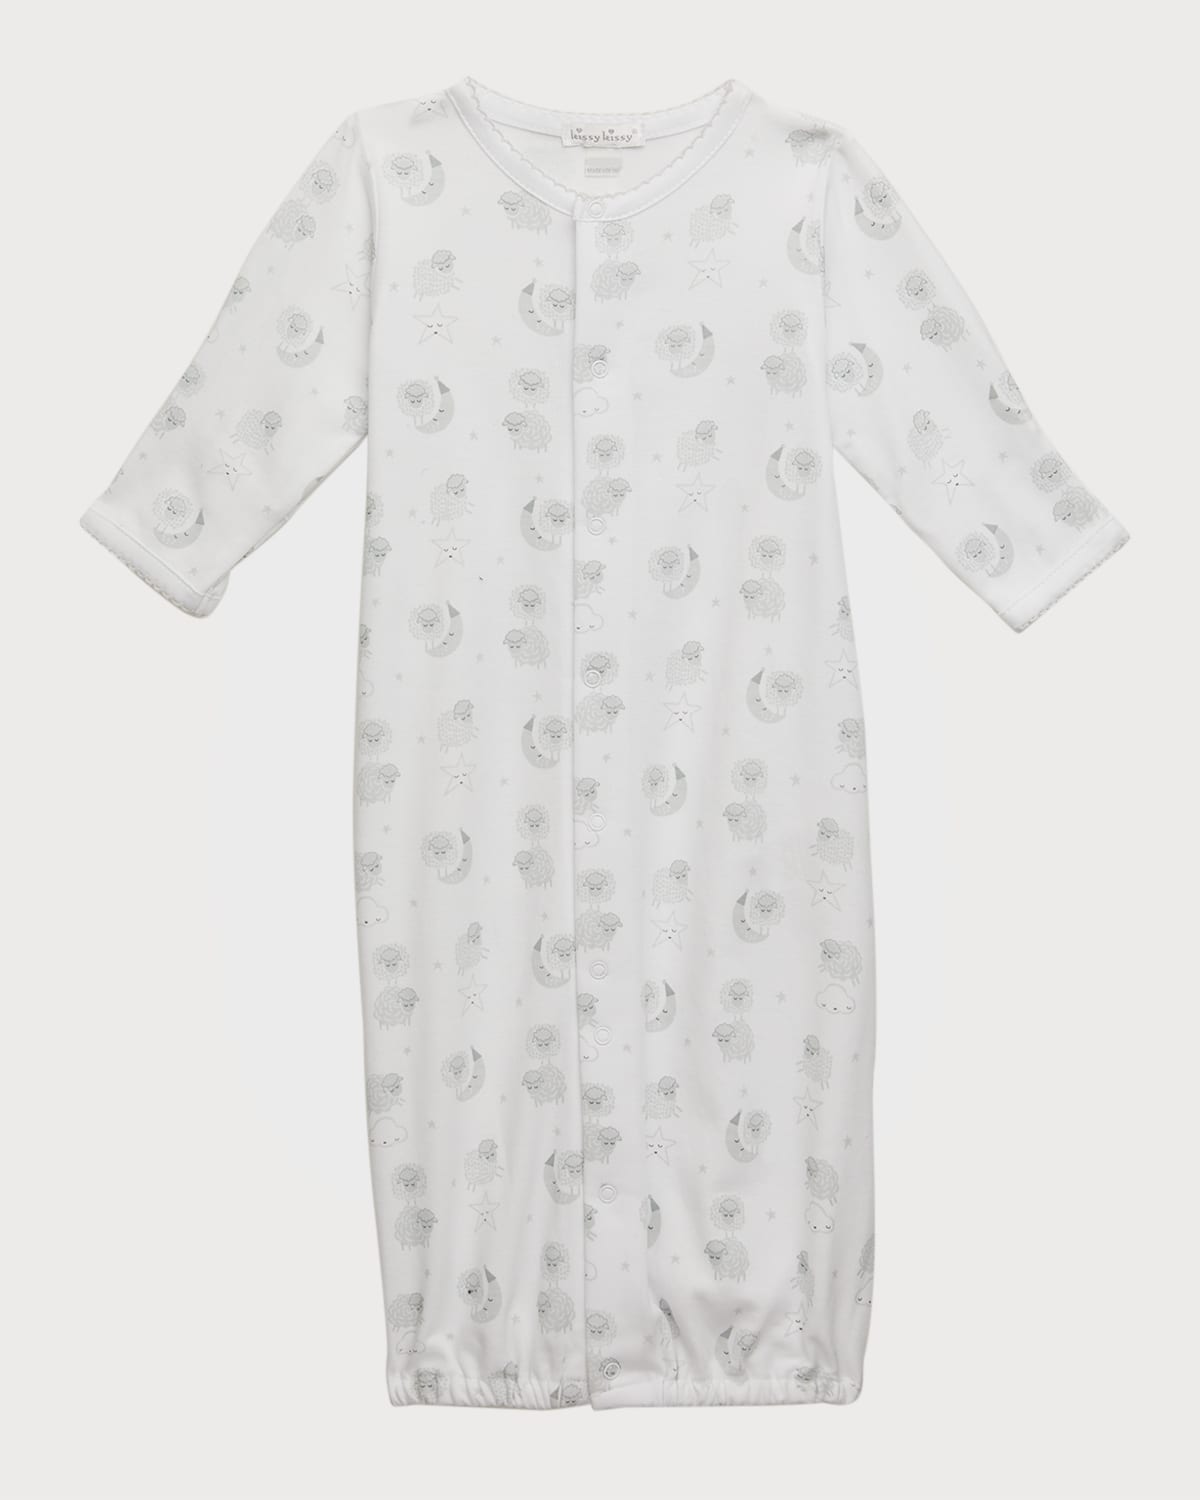 Kid'sNight Night Lammies Convertible Gown, Size Newborn-S